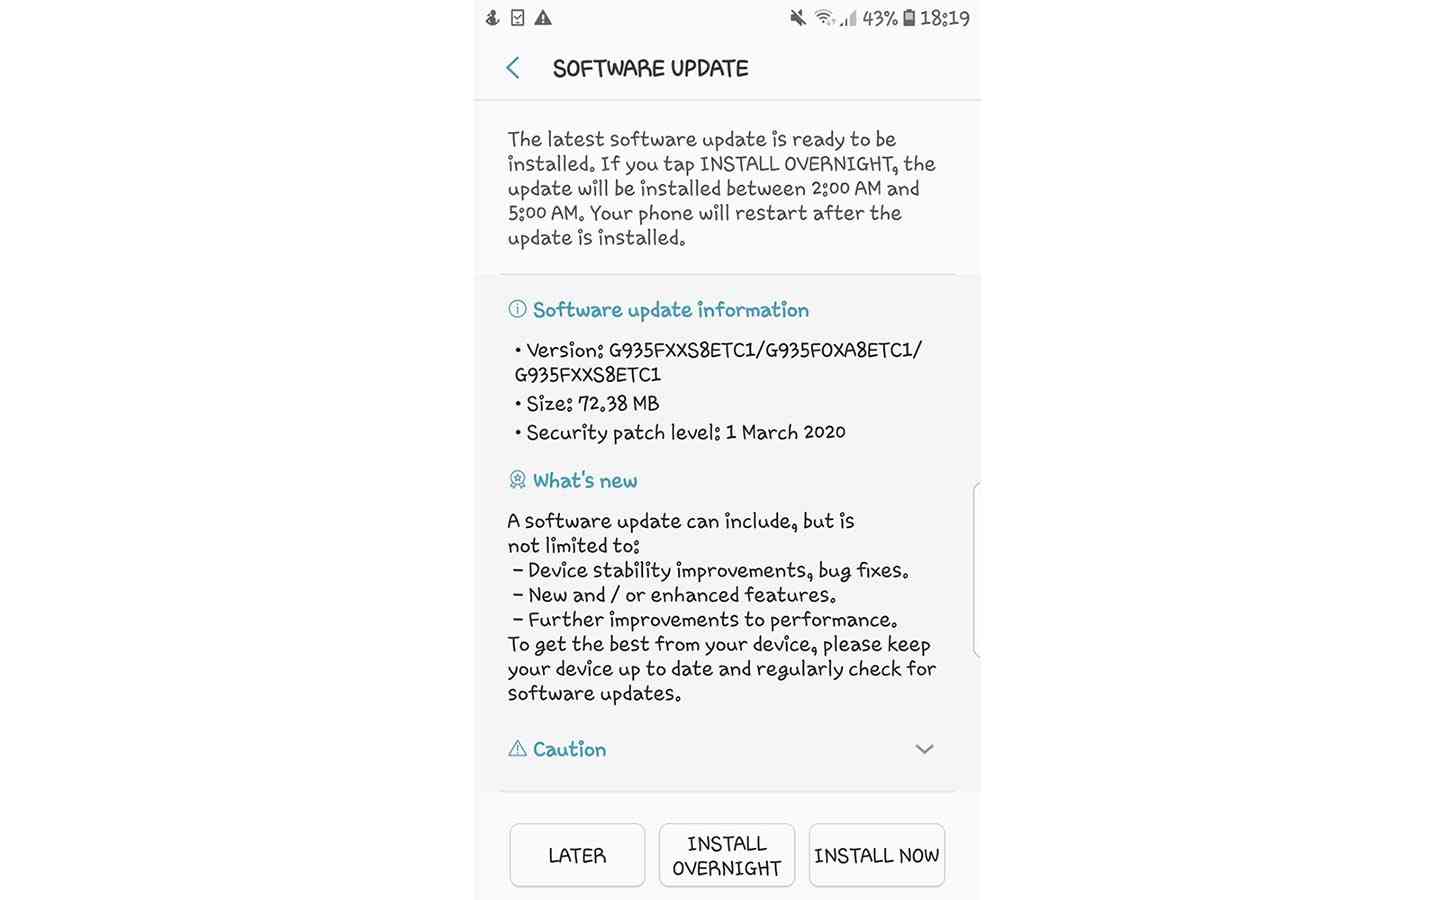 Galaxy S7 edge March 2020 update